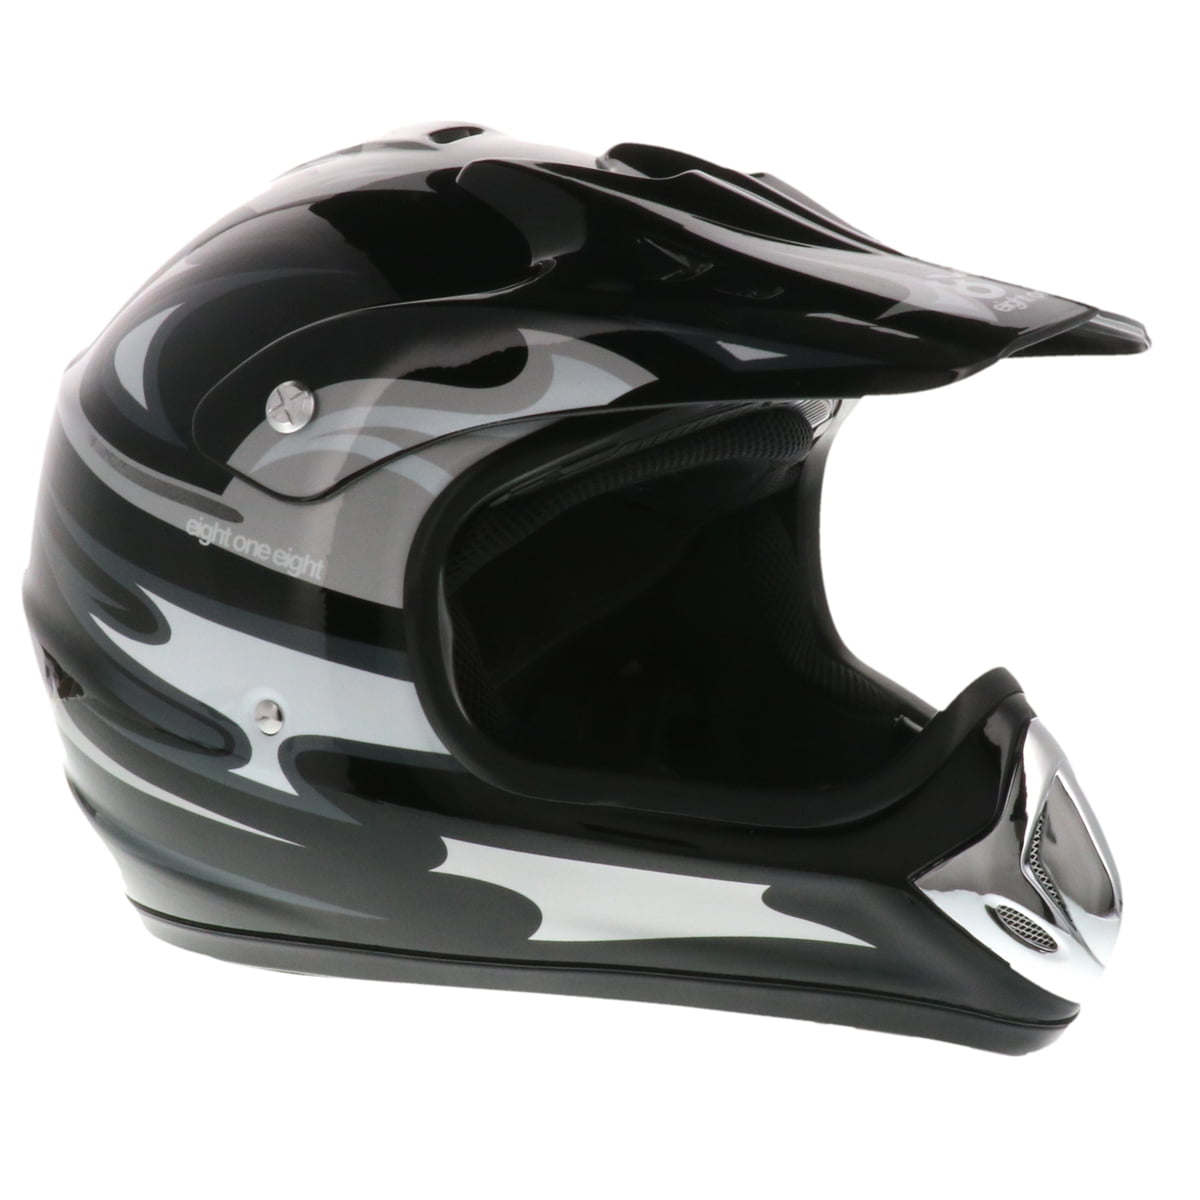 818 H351 Off-Road Motocross Helmet H351 FLAT BLACK S Flat Black, Small 